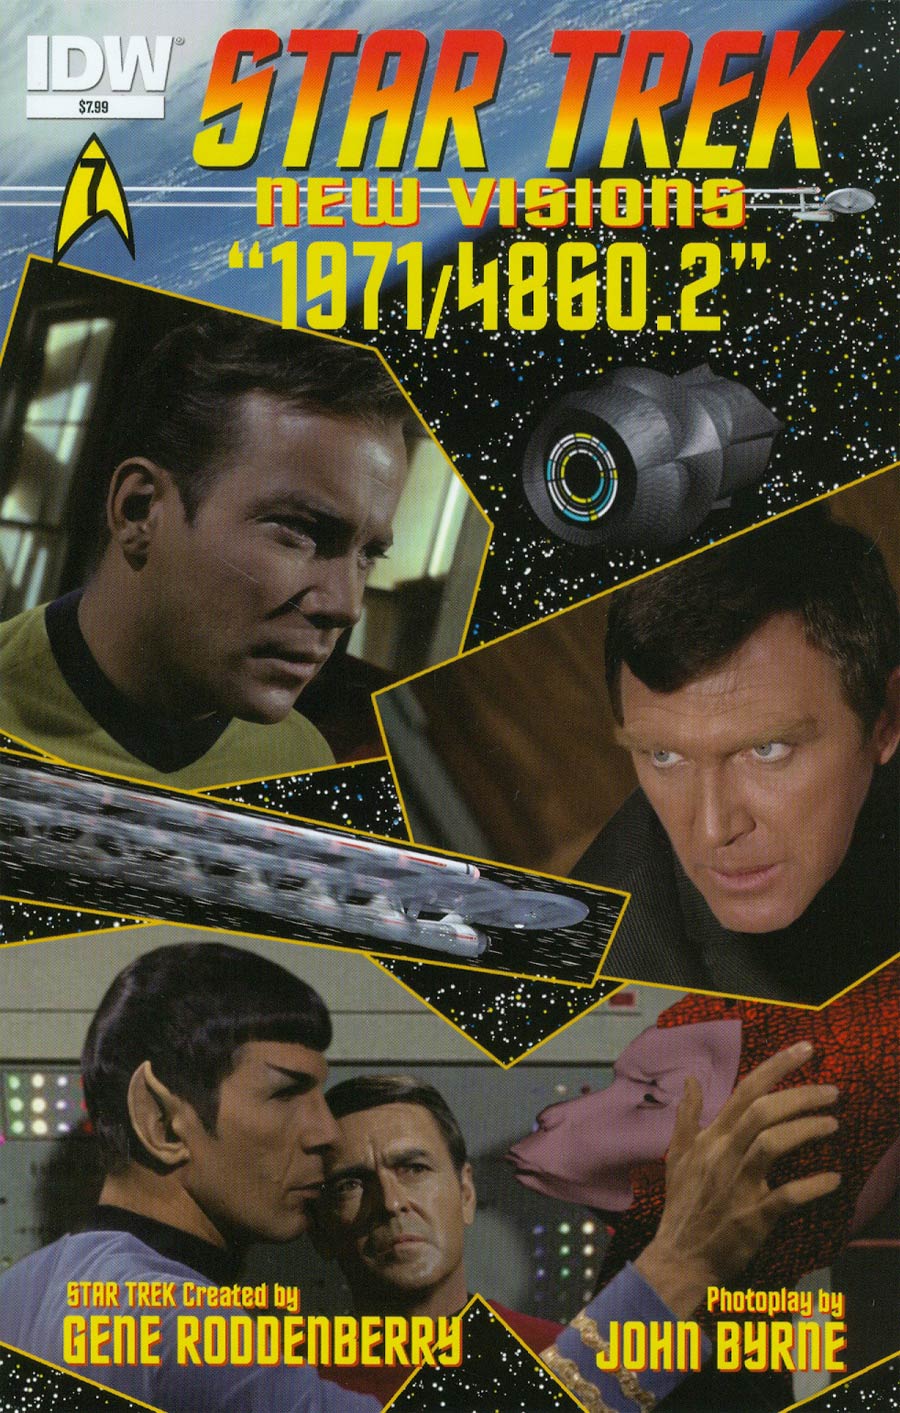 Star Trek New Visions #7 1971/4860.2